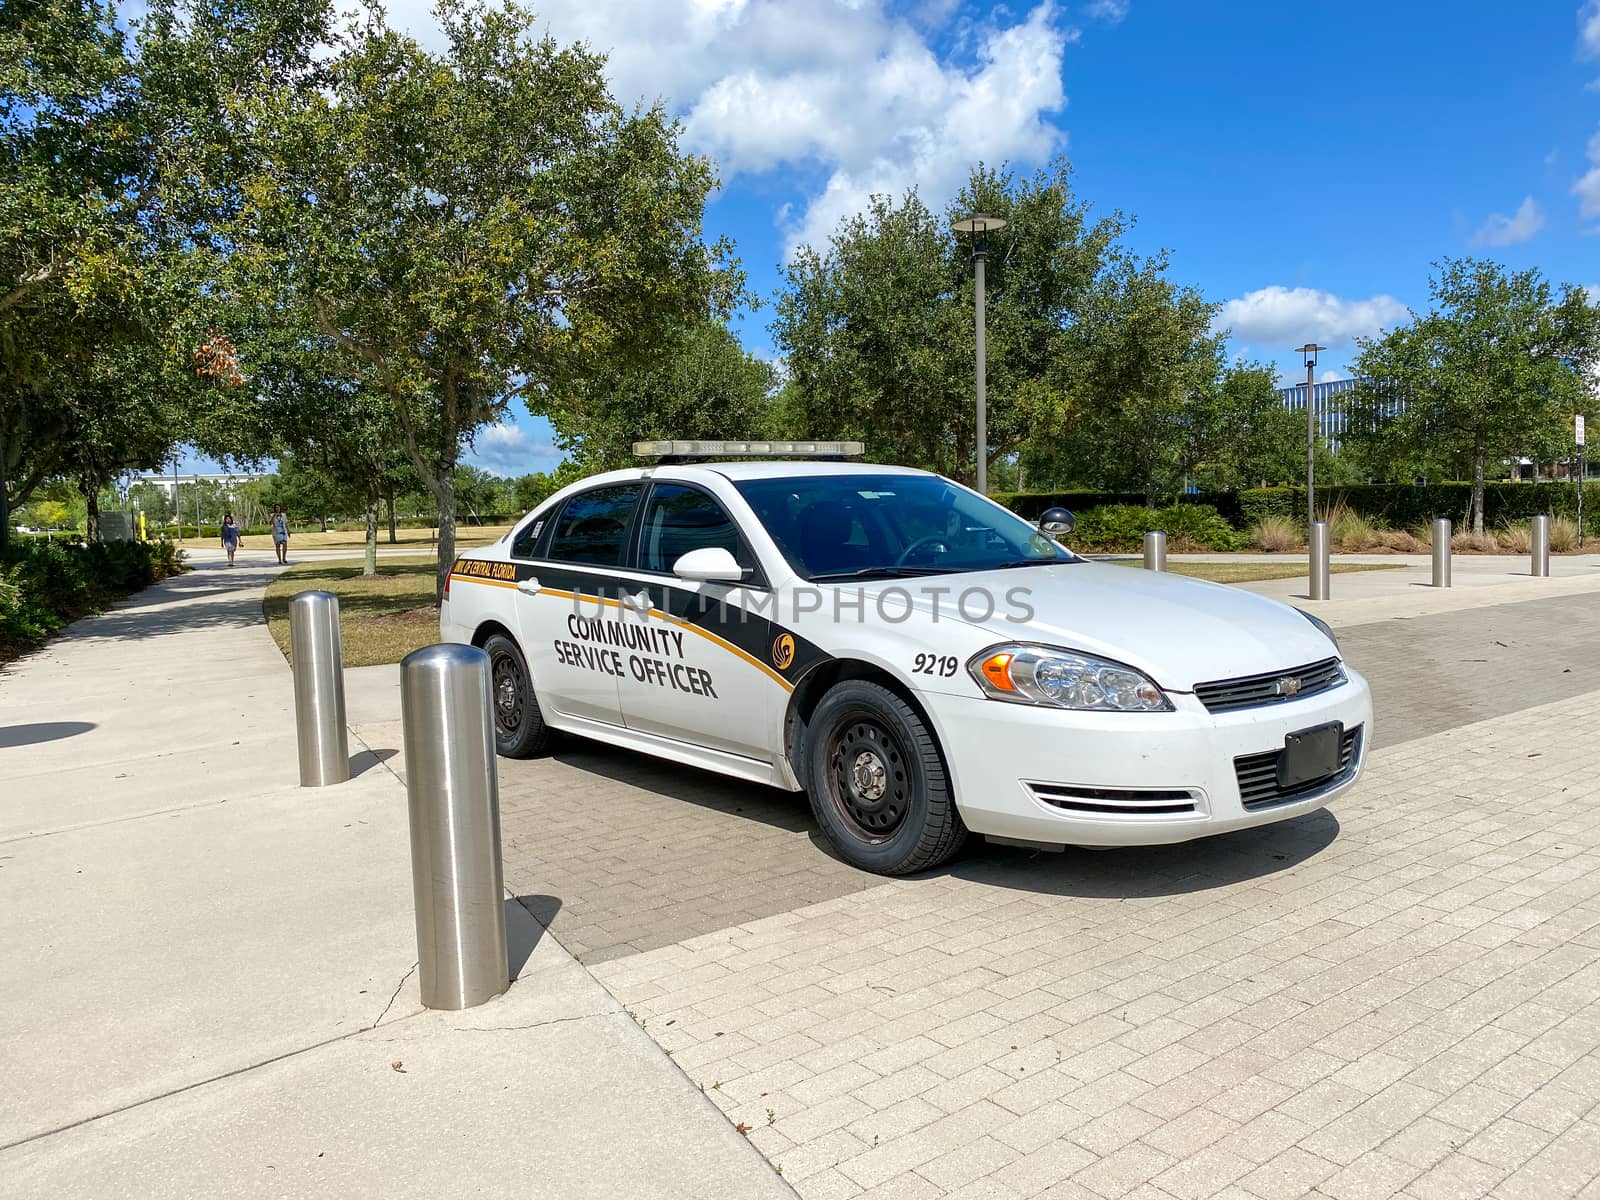 A University of Central Florida Community Service Officer patrol by Jshanebutt